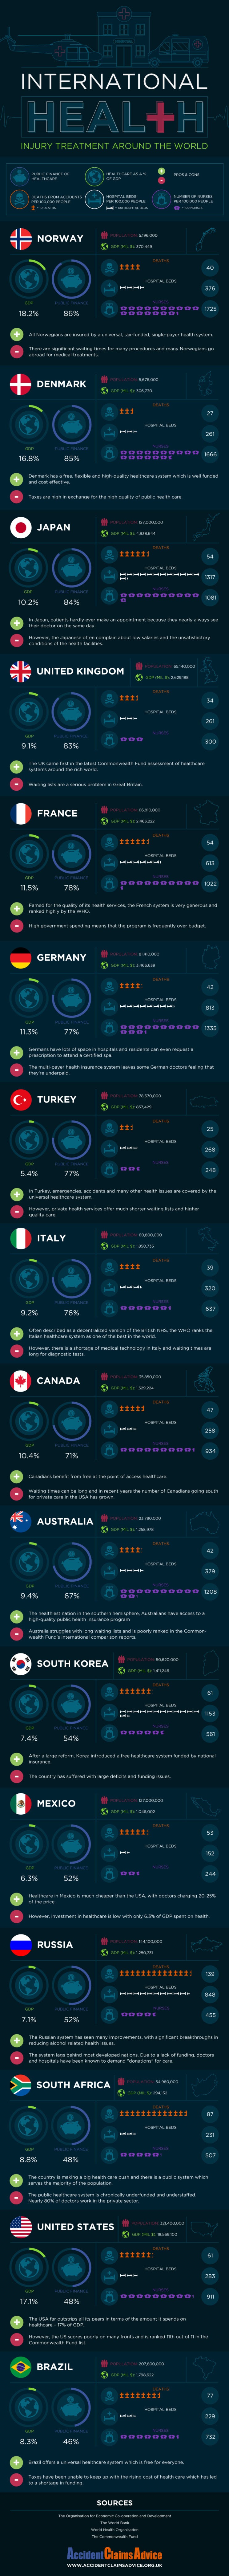 International health: injury treatment around the world #infographic